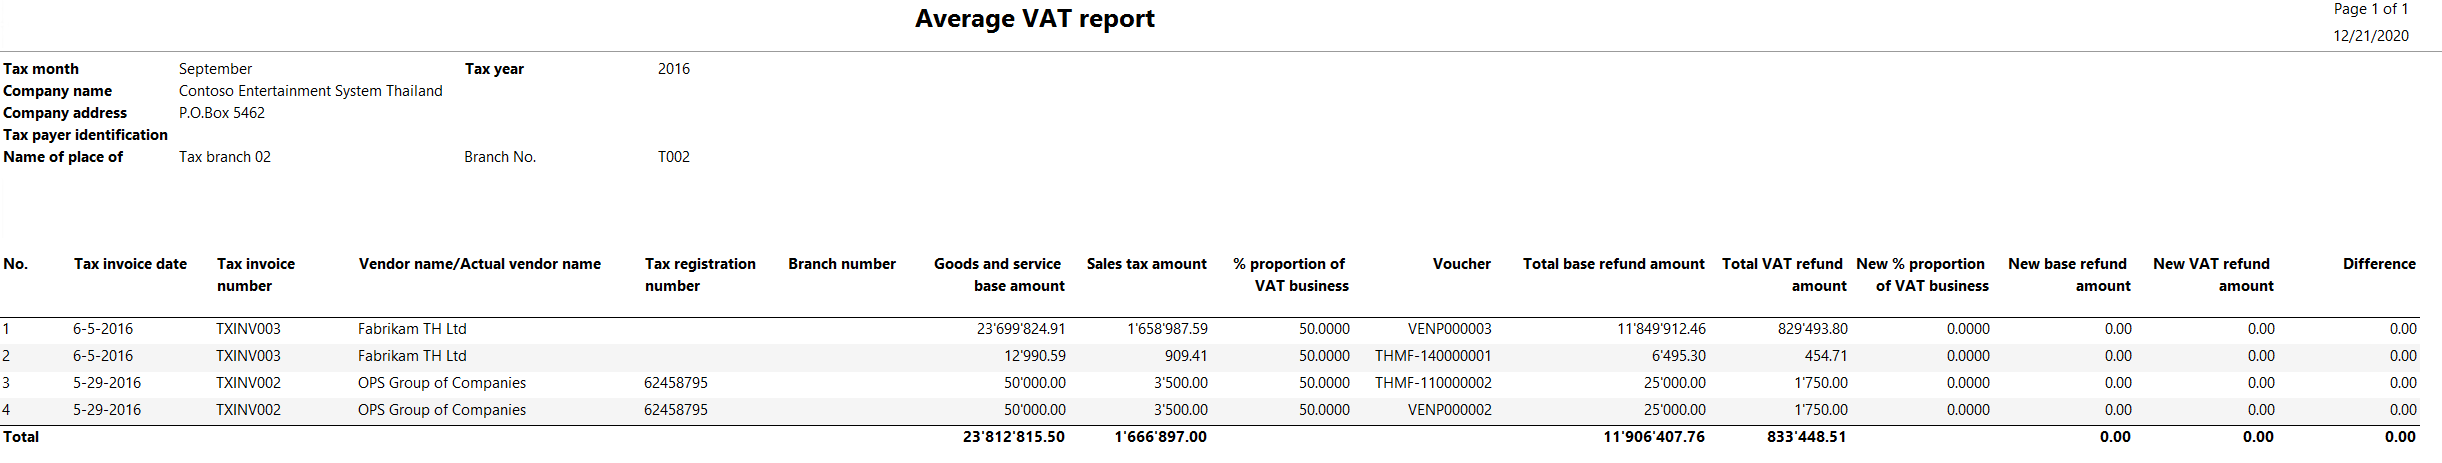 detailed Average VAT report.